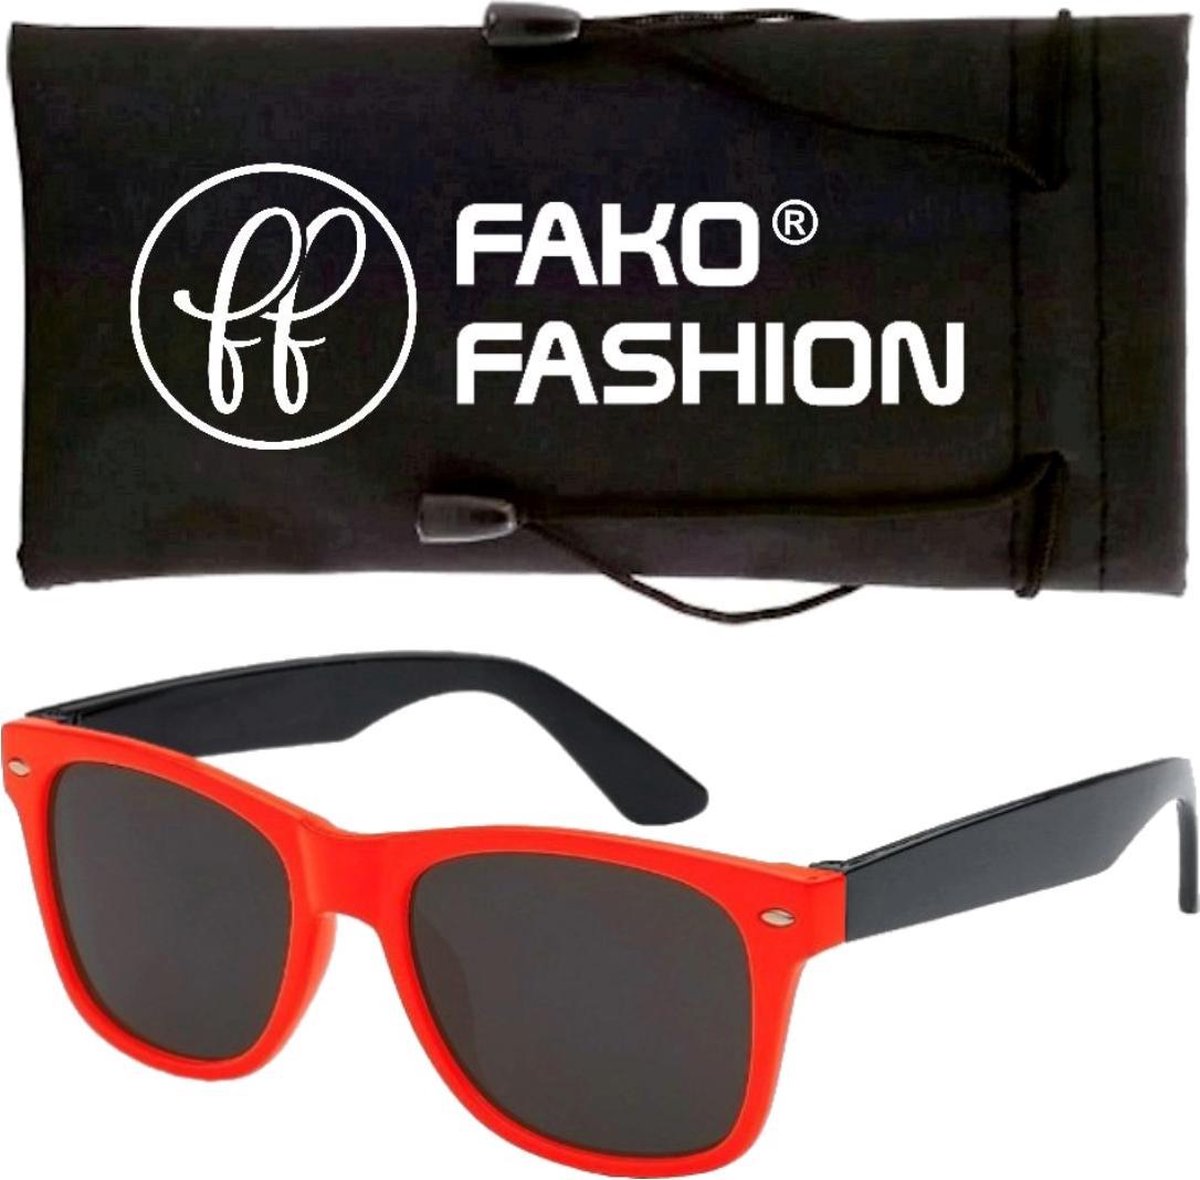 Fako Fashion® - Kinder Zonnebril - Duo - Rood/Zwart